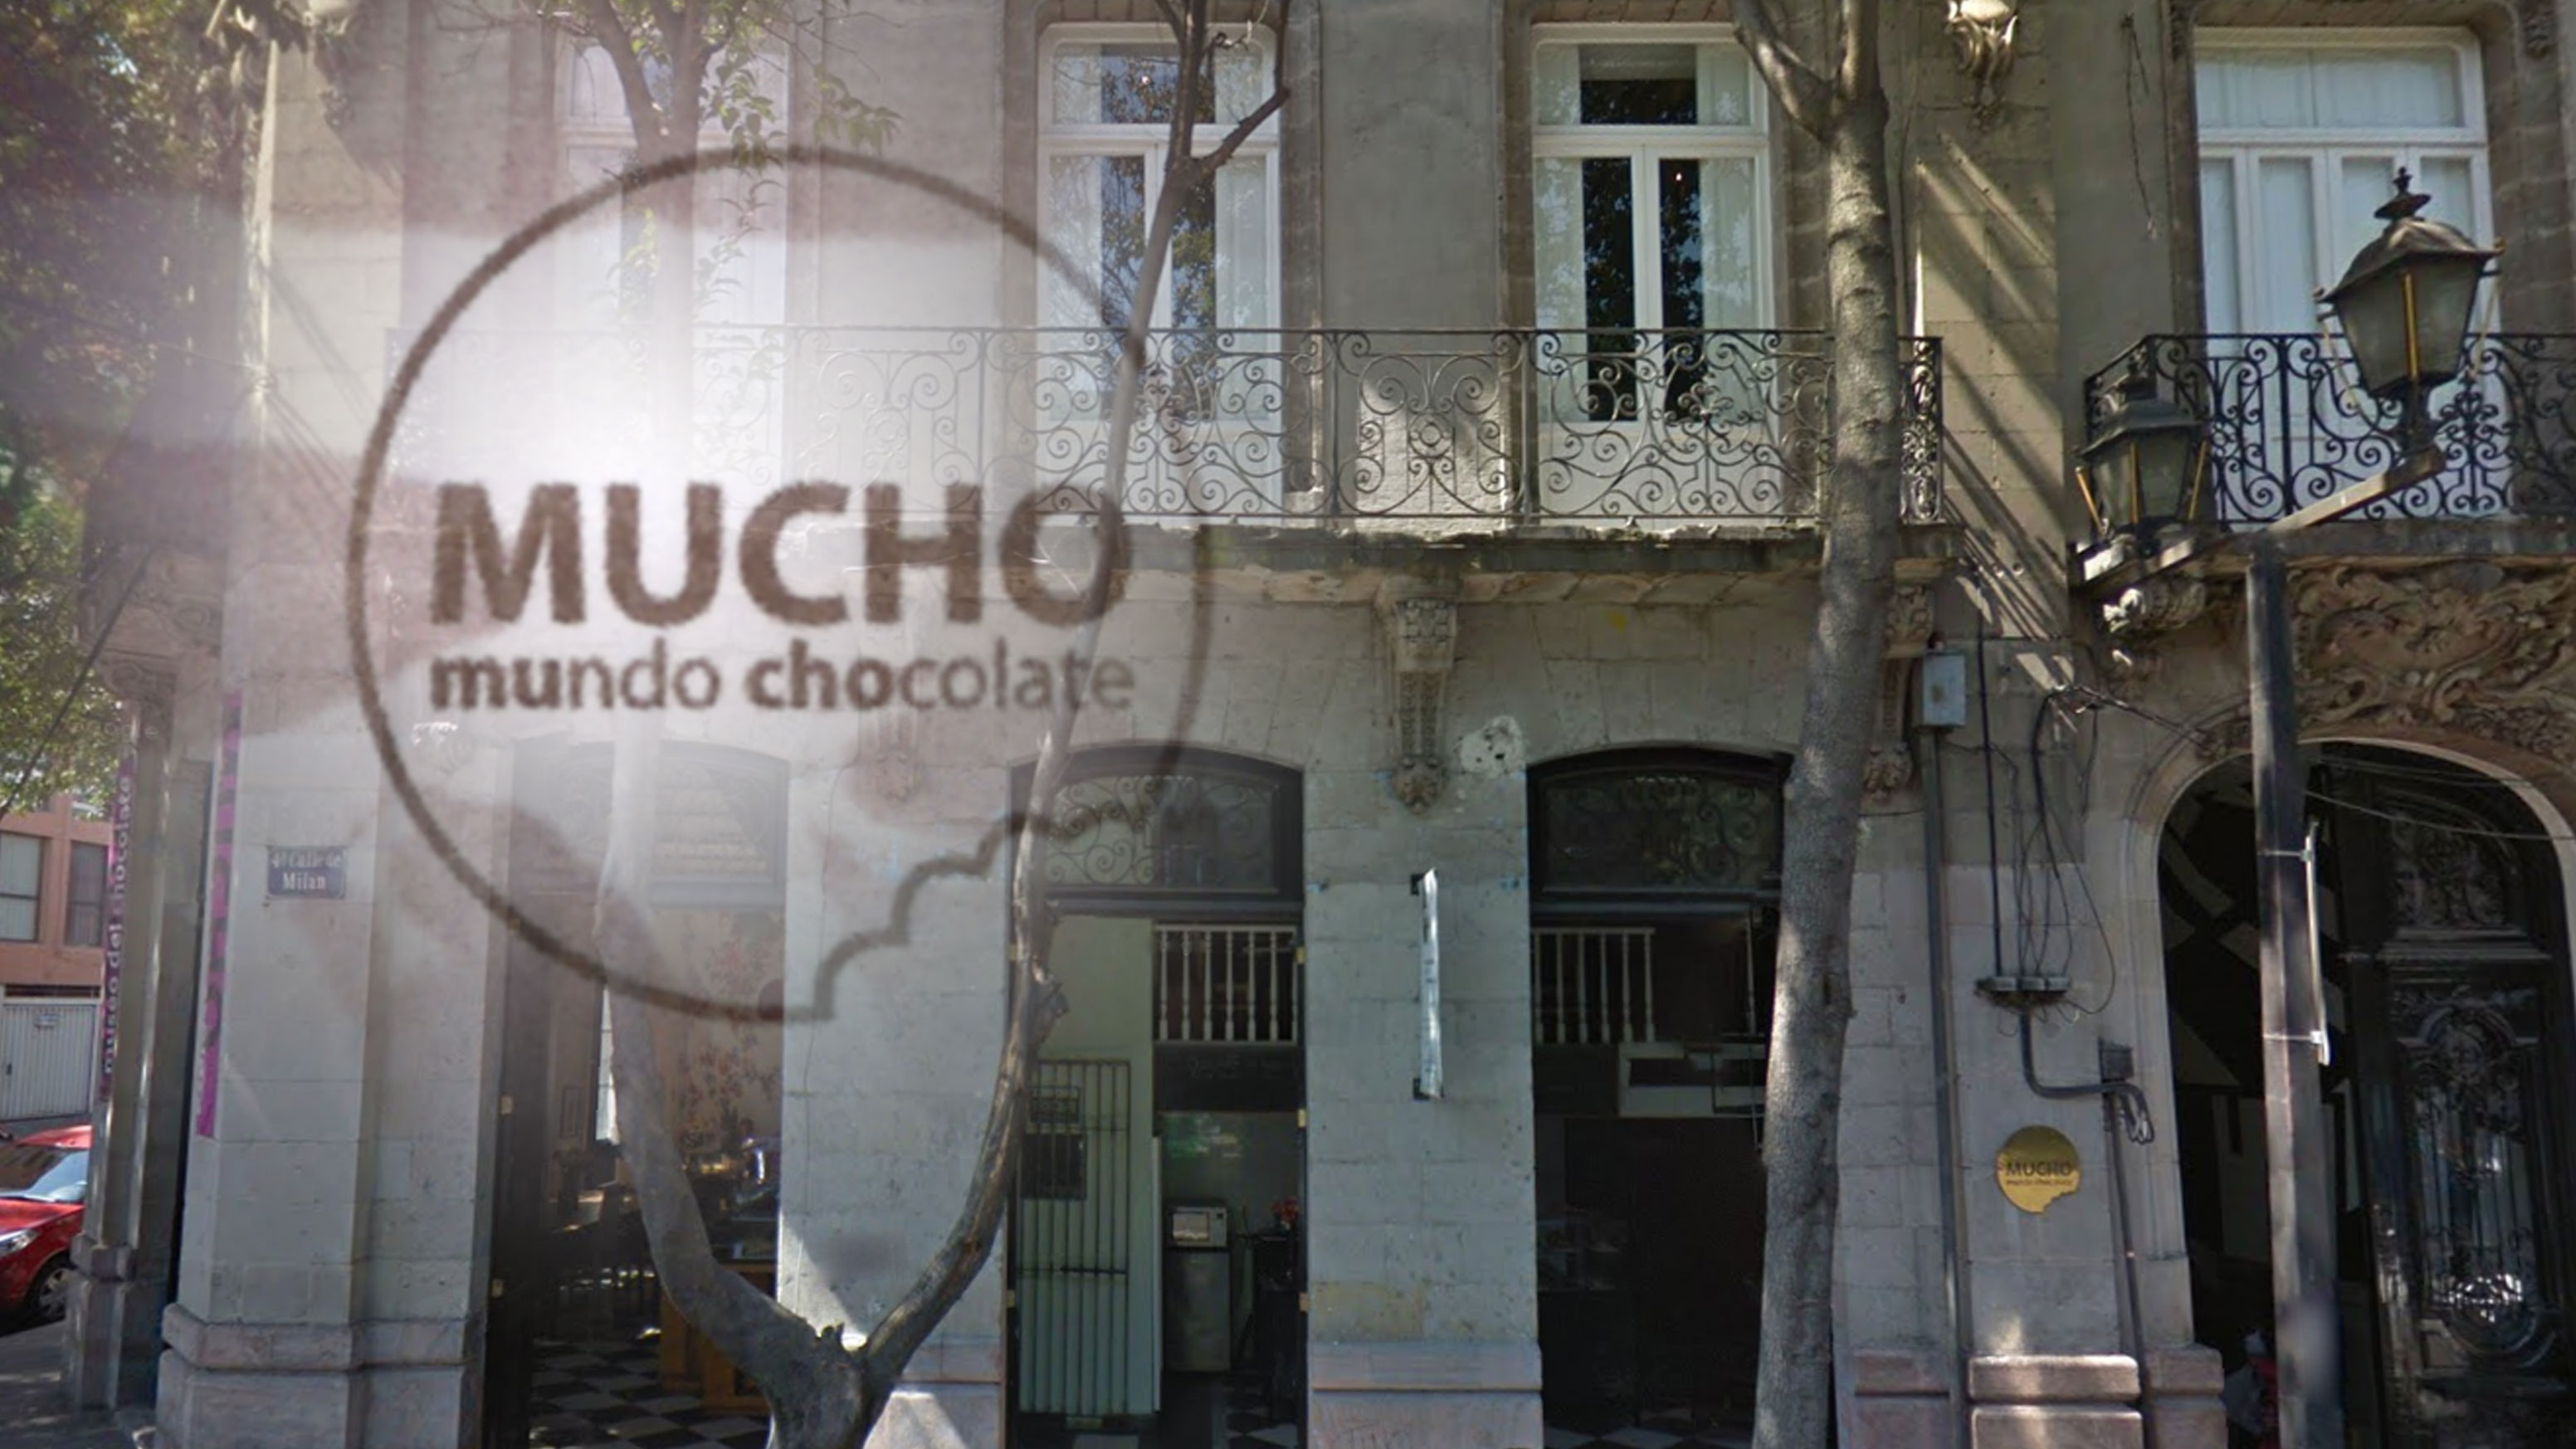 MUCHO Mundo Chocolate (Museo del Chocolate)